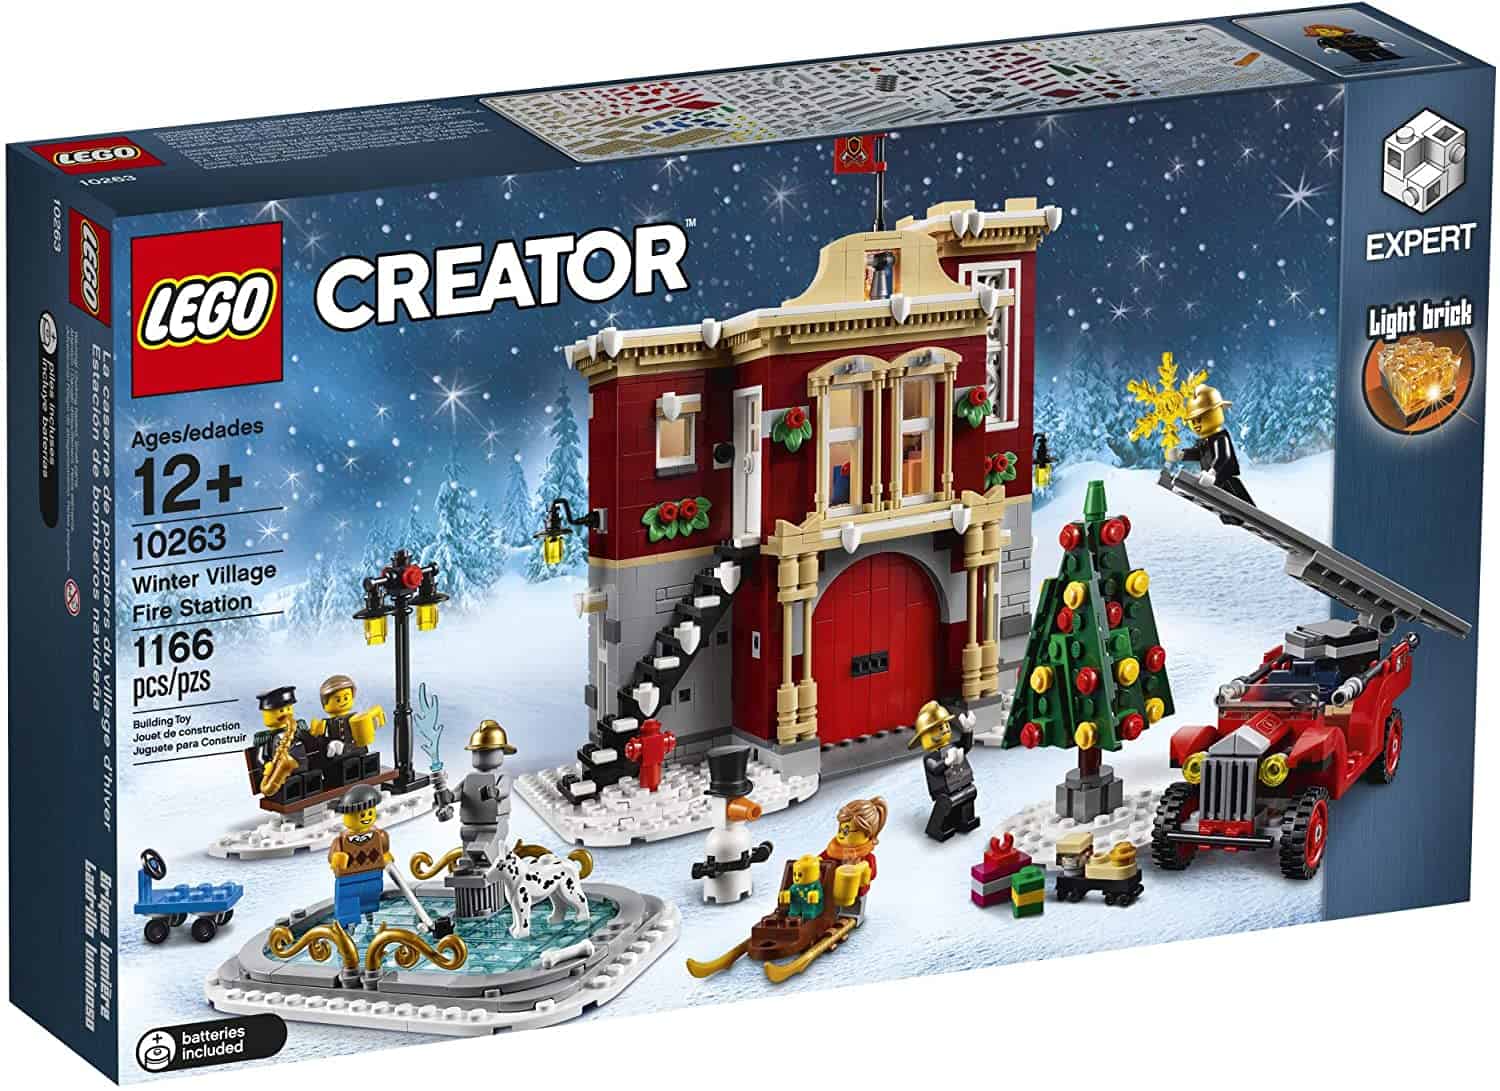 Leukste winter hulpdiensten: LEGO Creator Expert Brandweerkazerne in winterdorp 10263